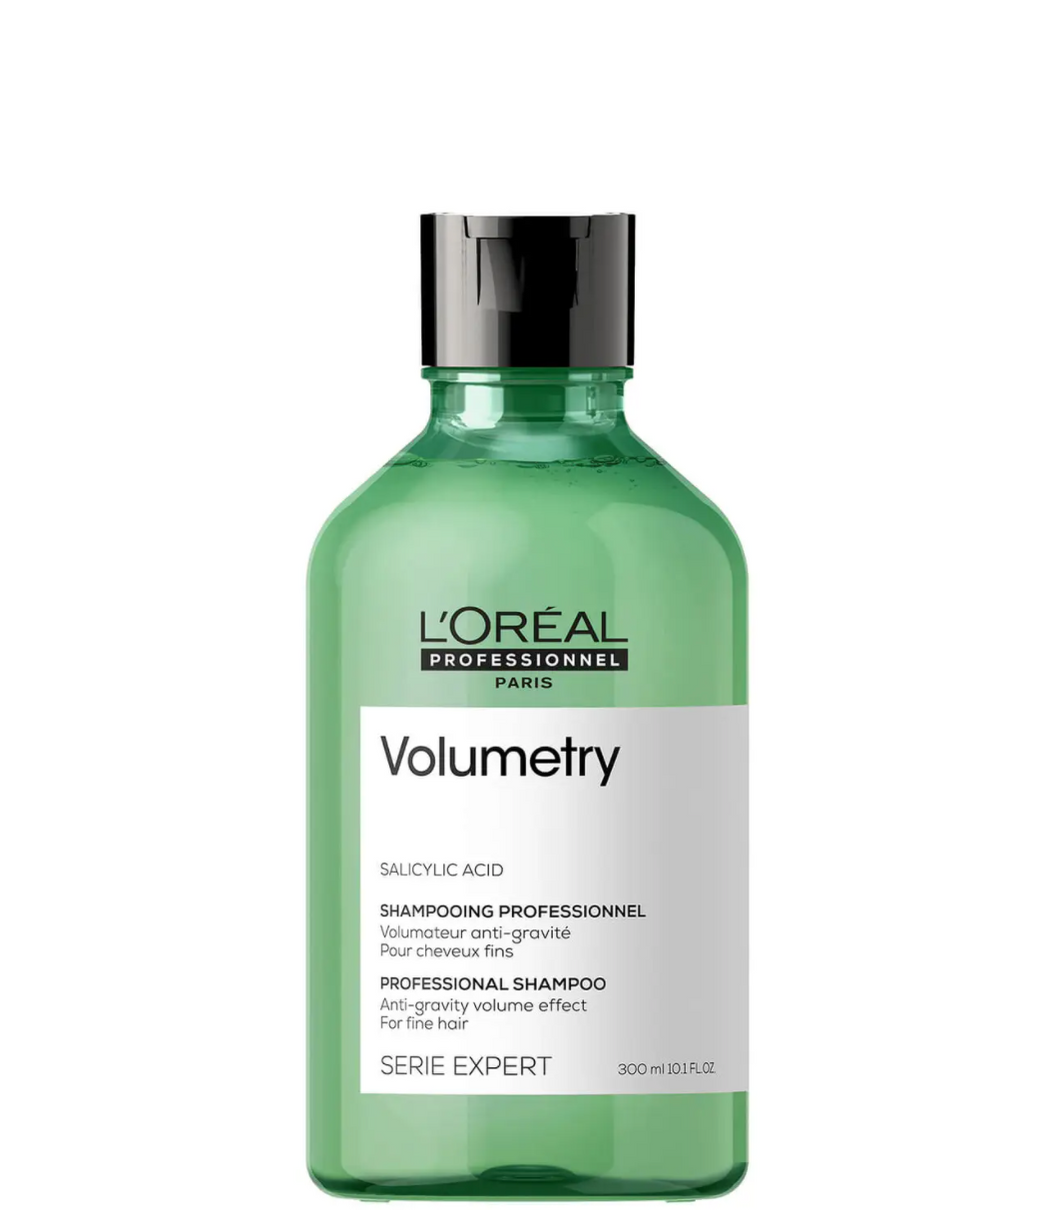 L'OREAL Serie Expert Volumetry Shampoo